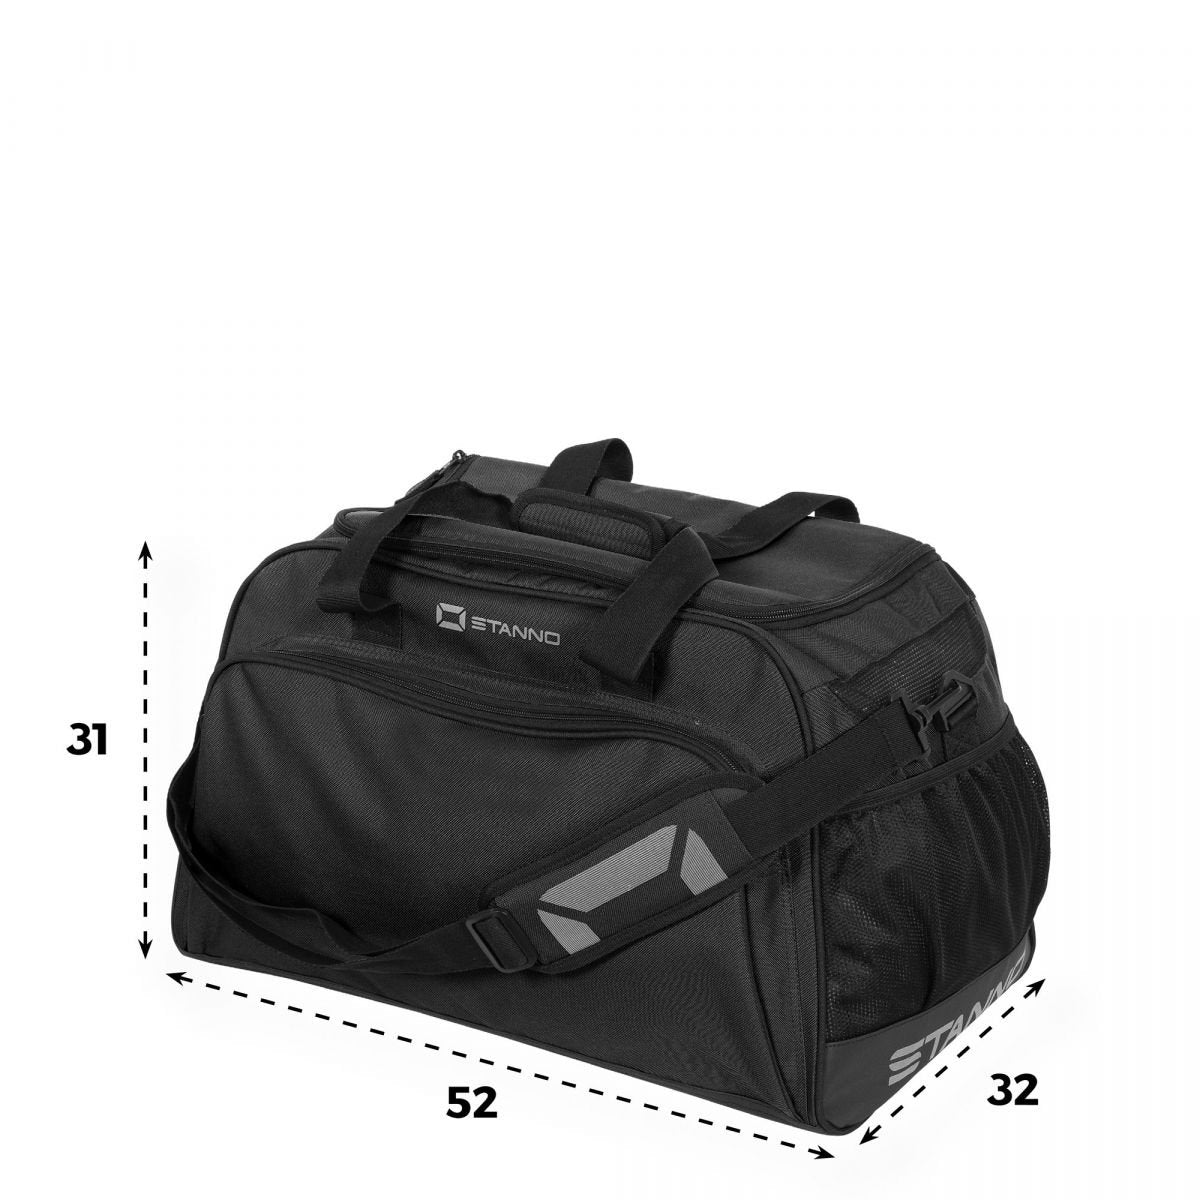 STANNO MERANO KIT BAG (one size)